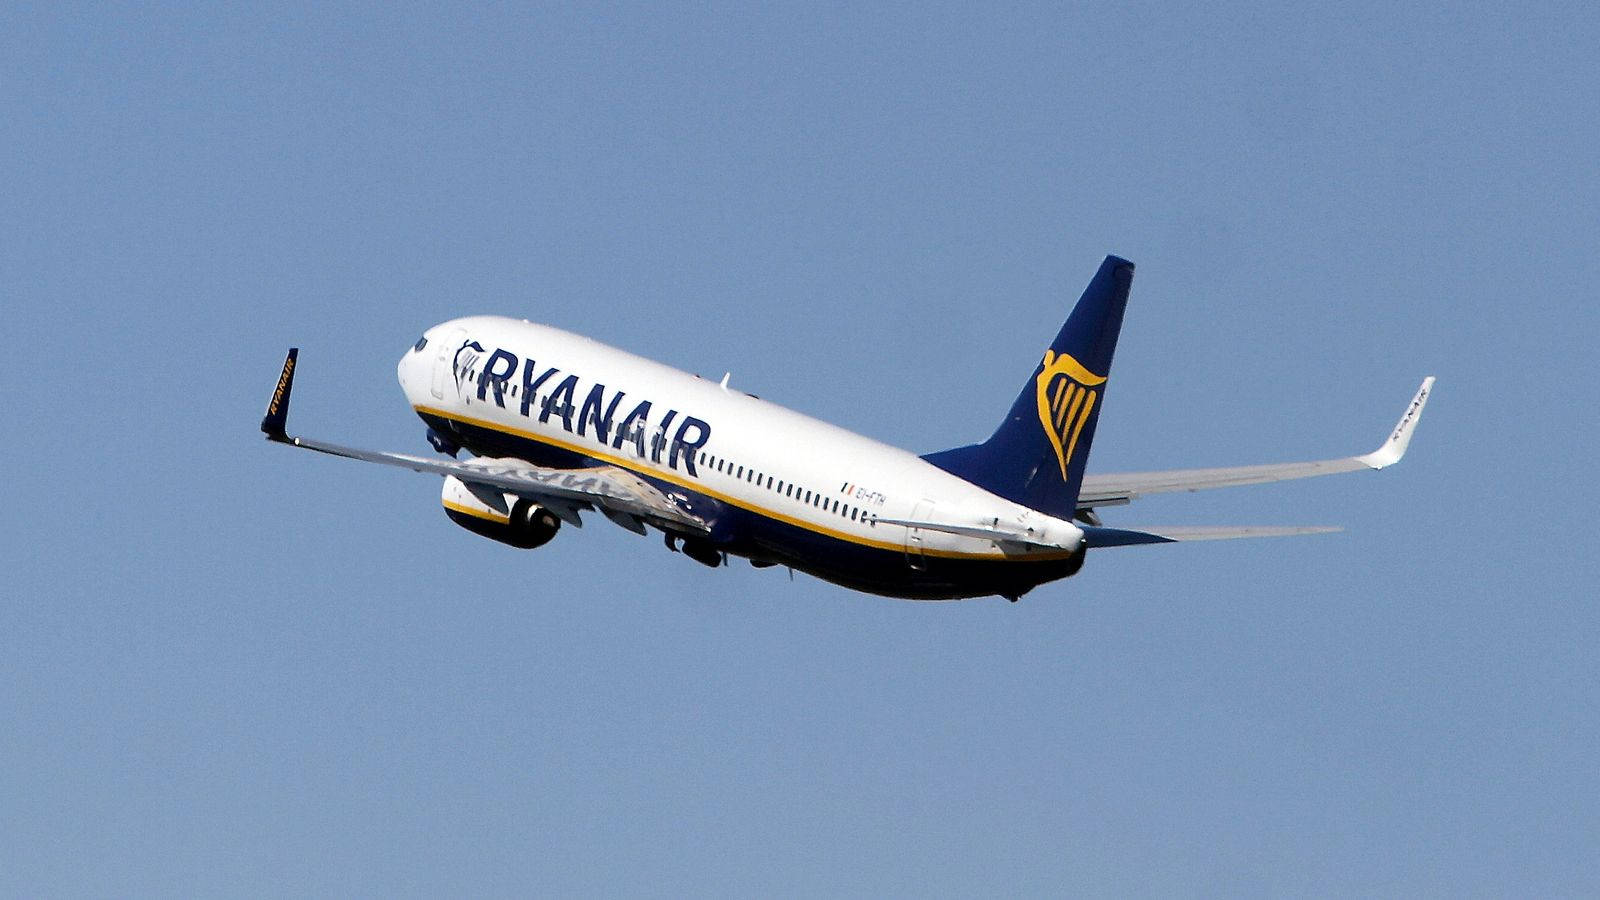 Ryanair Aircraft Soaring Through the Sky Wallpaper